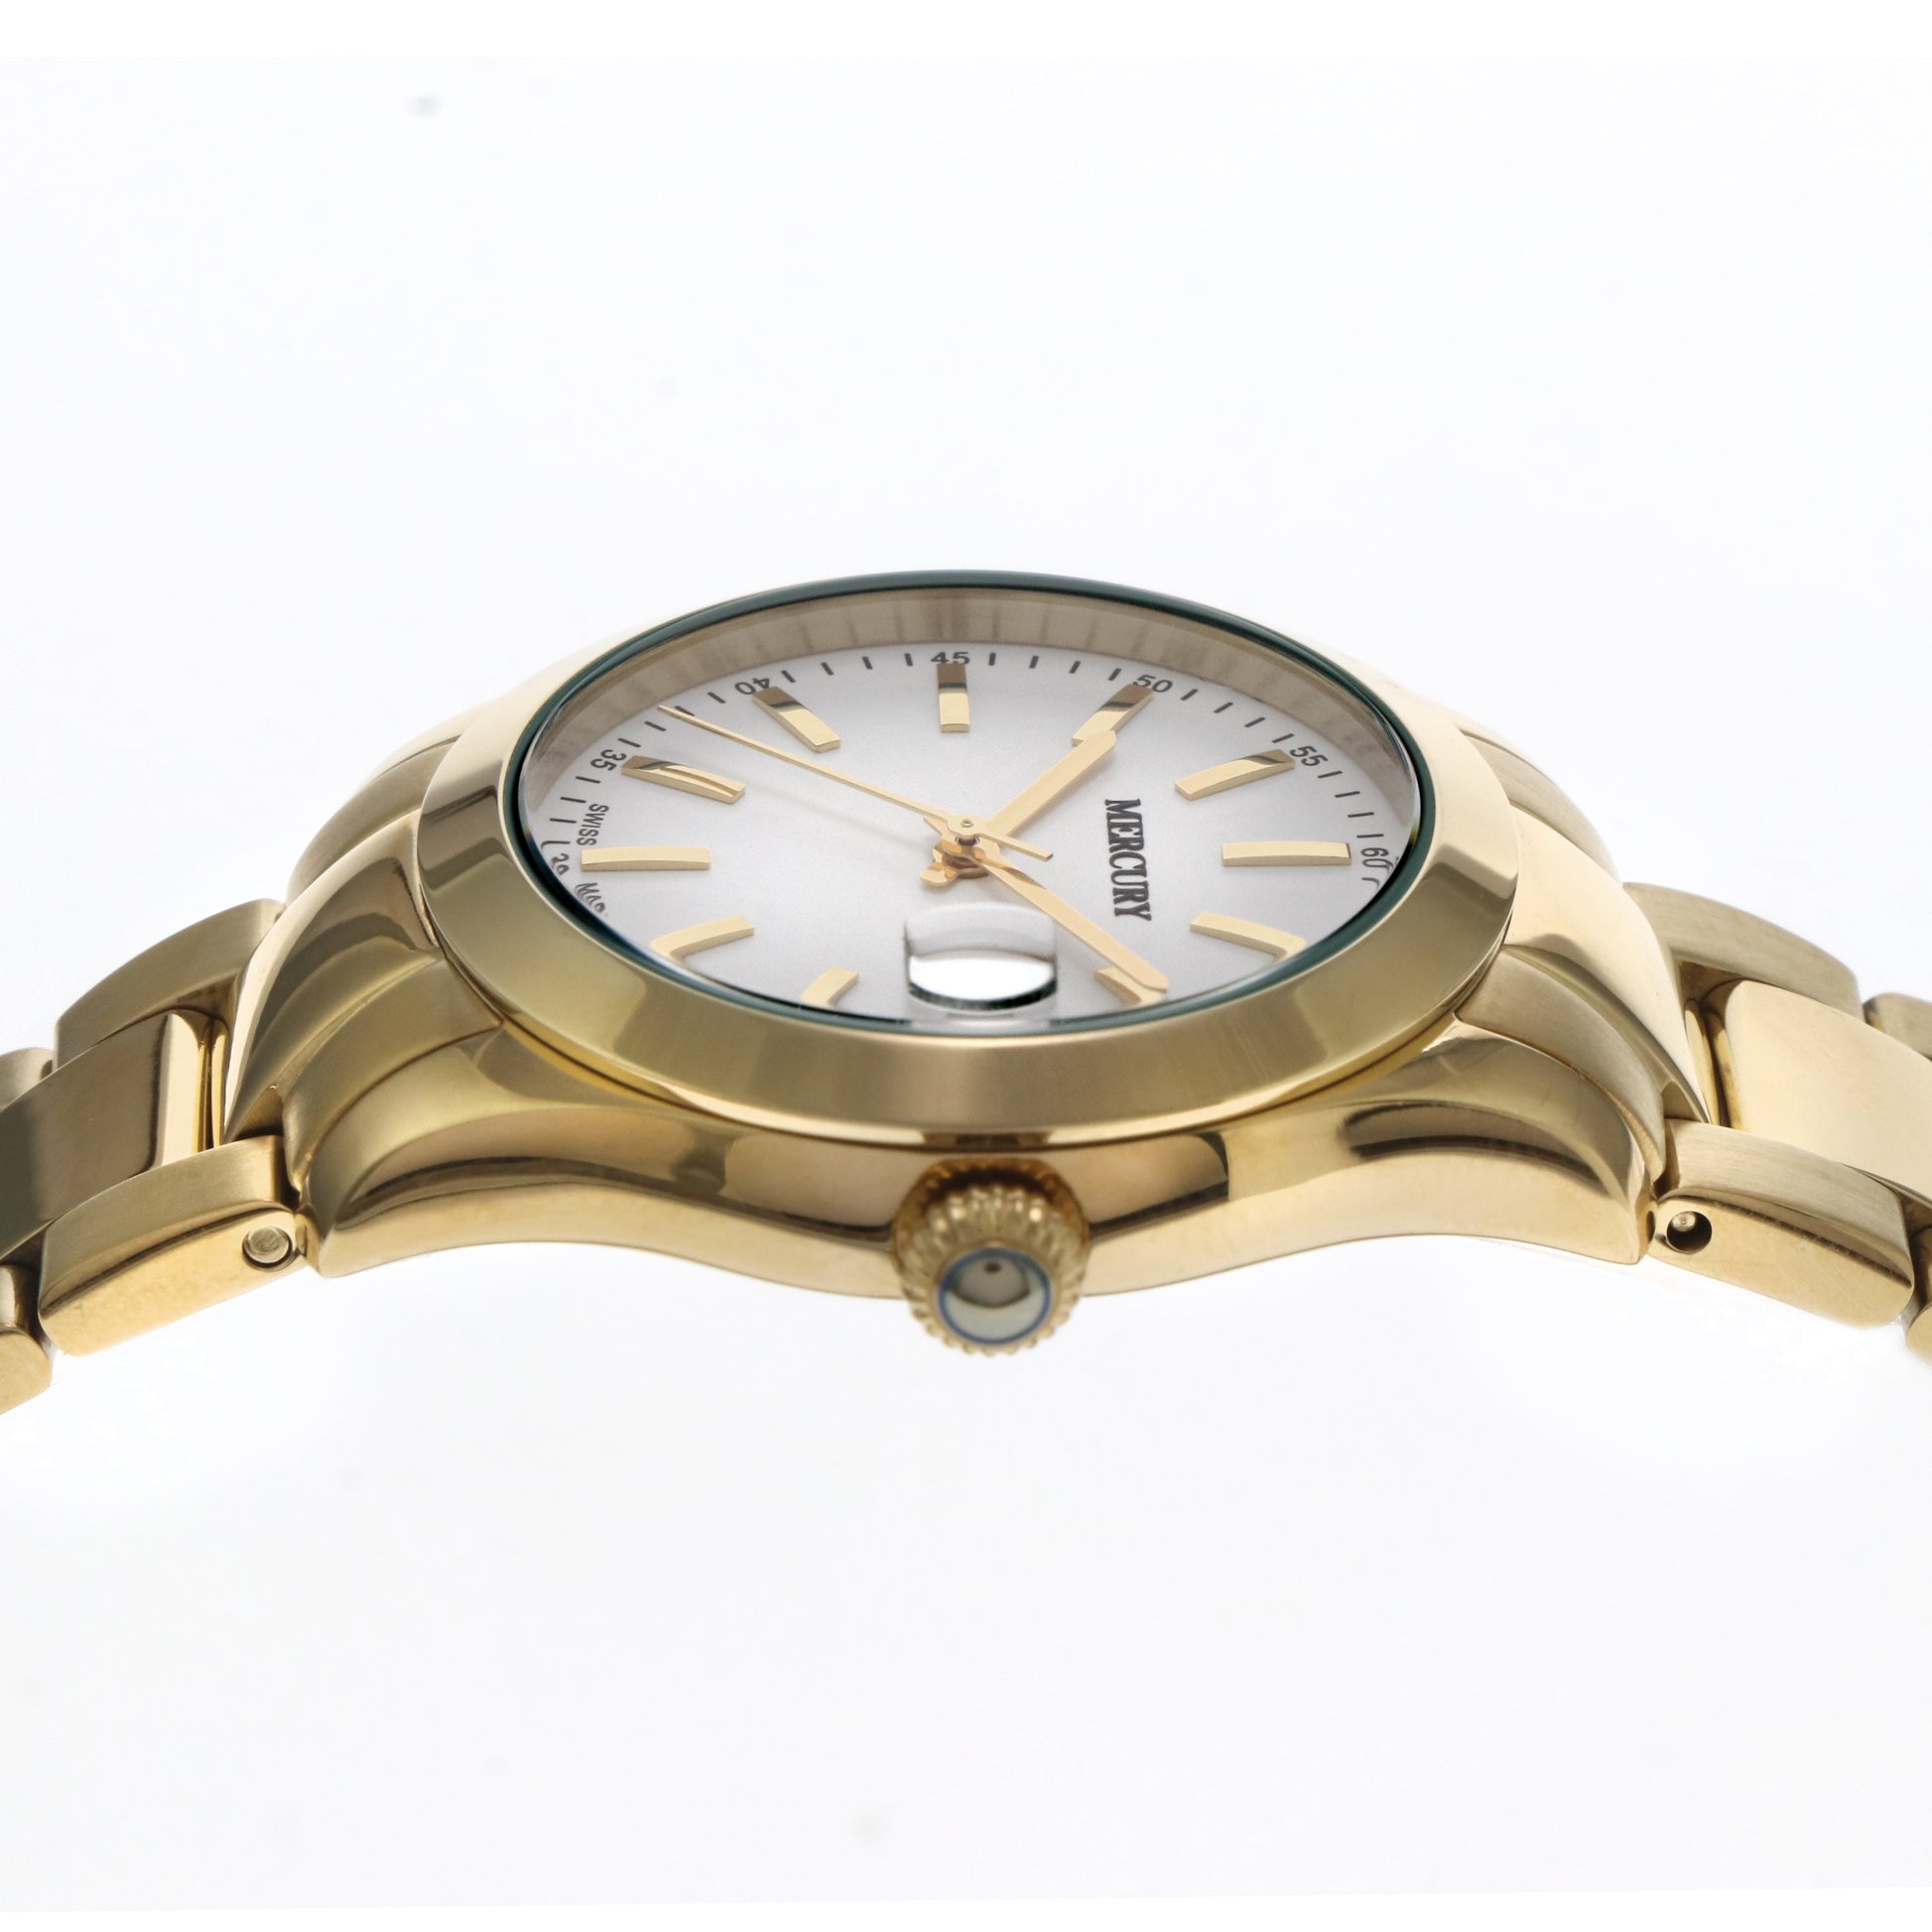 Mercury Women's Swiss Quartz Watch with White Dial - MER-0028